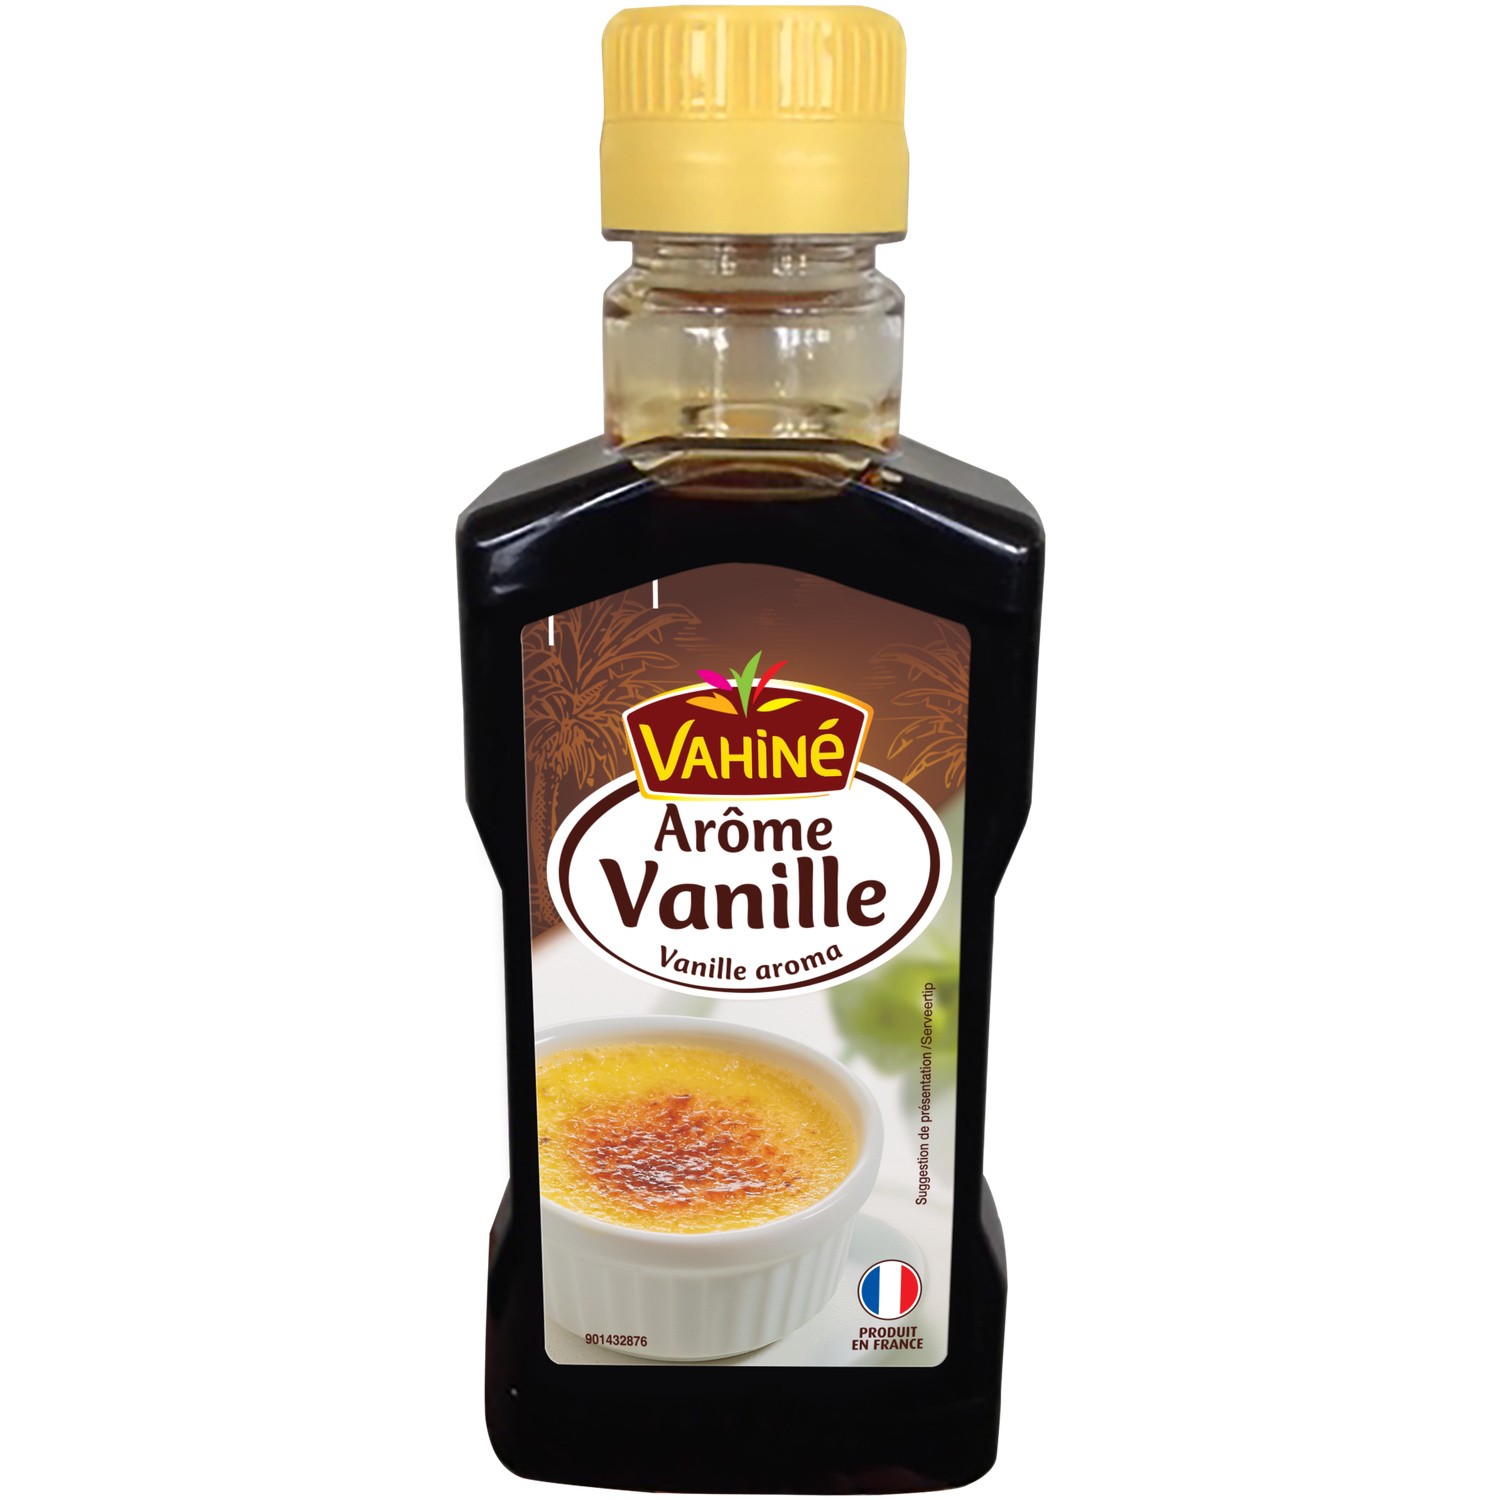 Arôme vanille